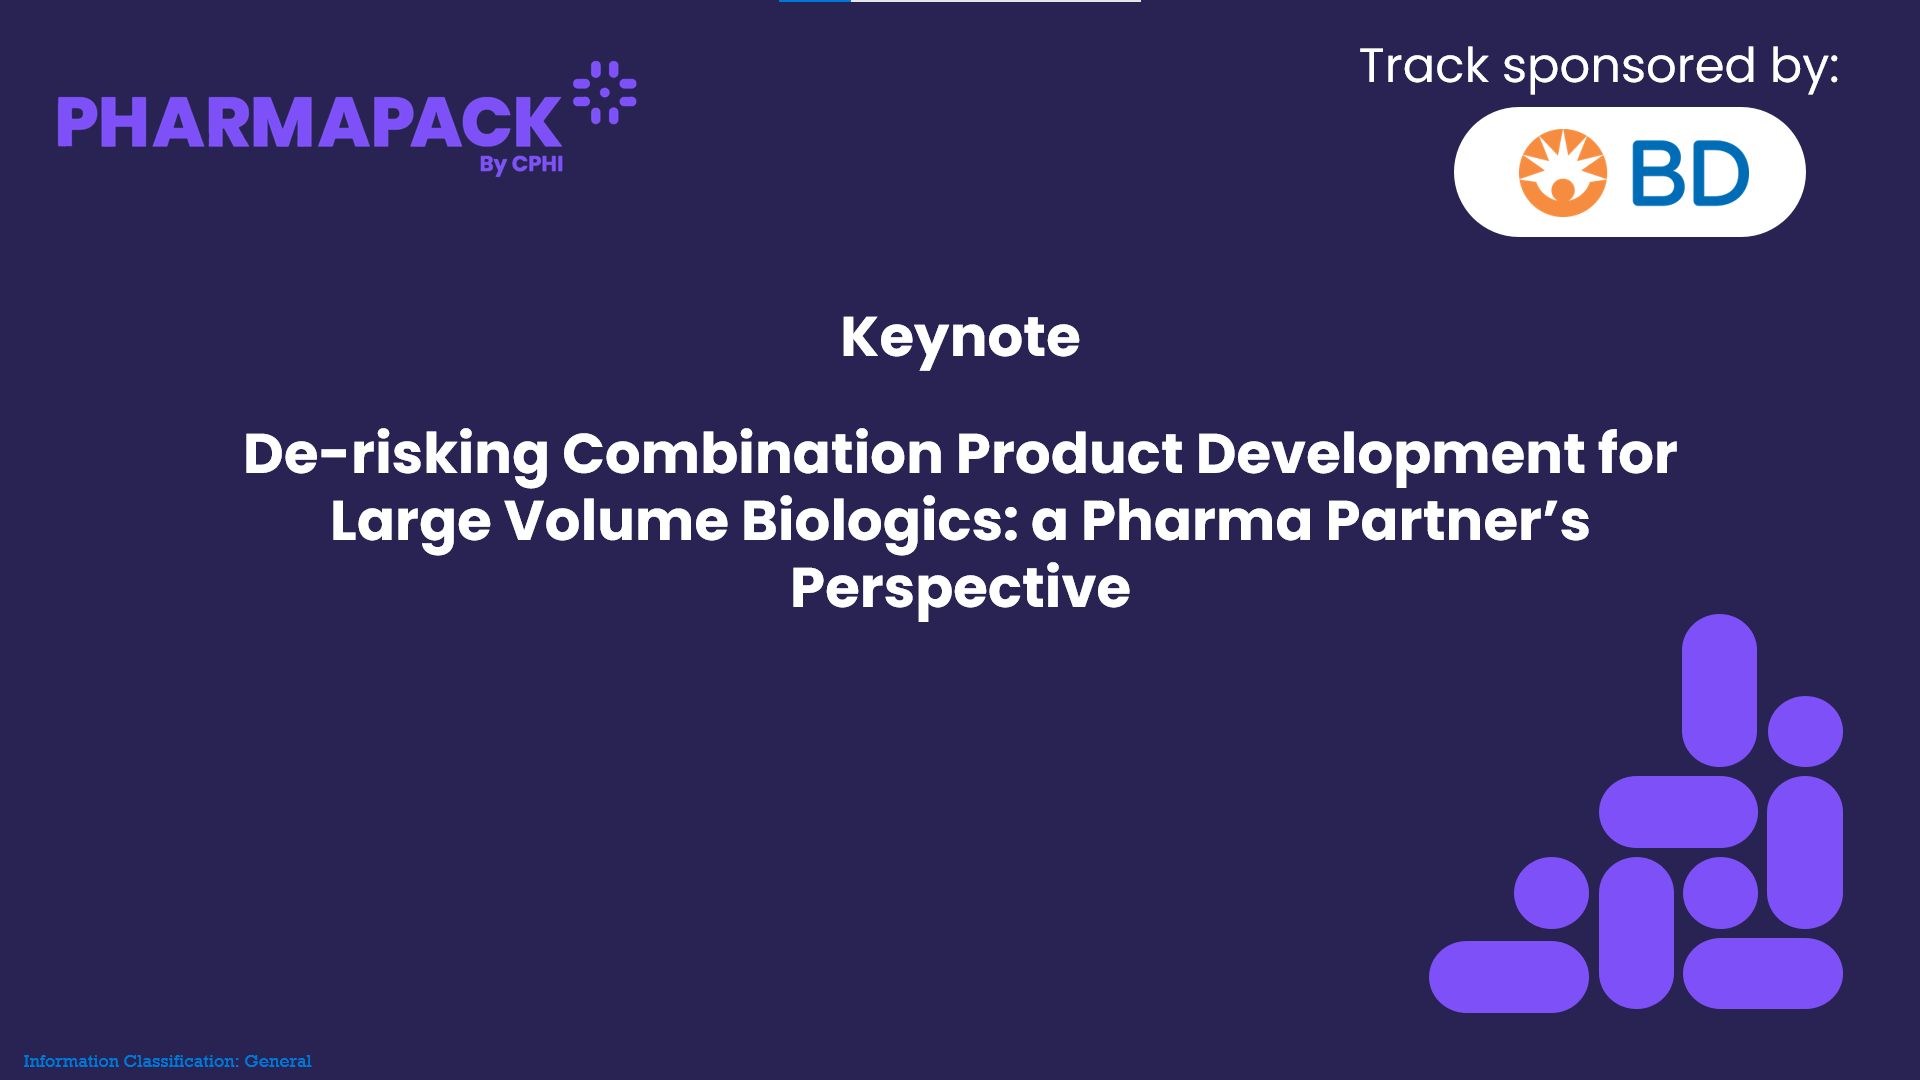 De-risking combination product development for large volume biologics: a pharma partner’s perspective